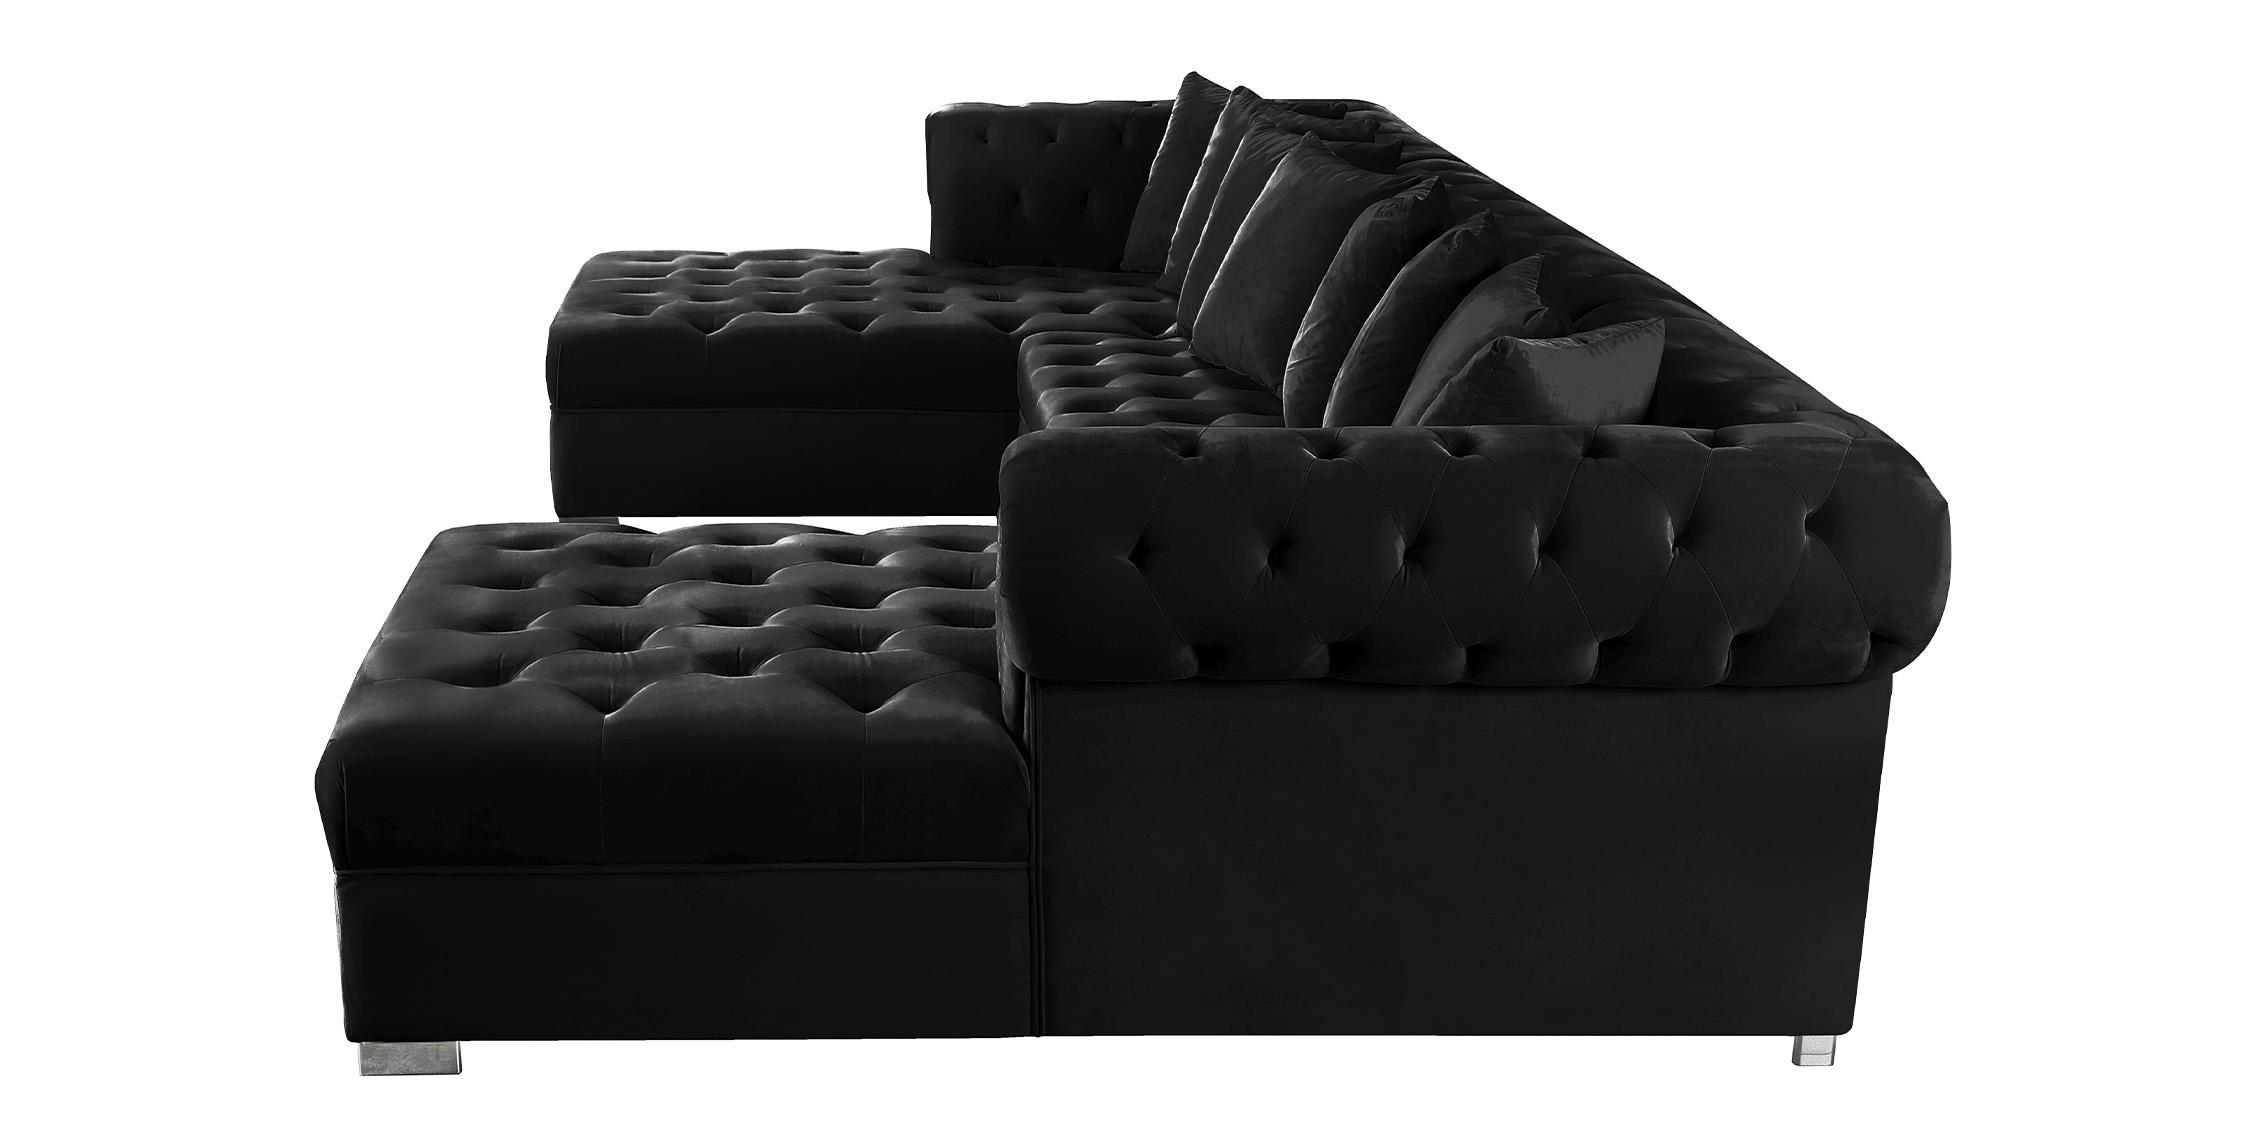 

    
Meridian Furniture PRESLEY 698Black-Sectional Sectional Sofa Black 698Black-Sectional
